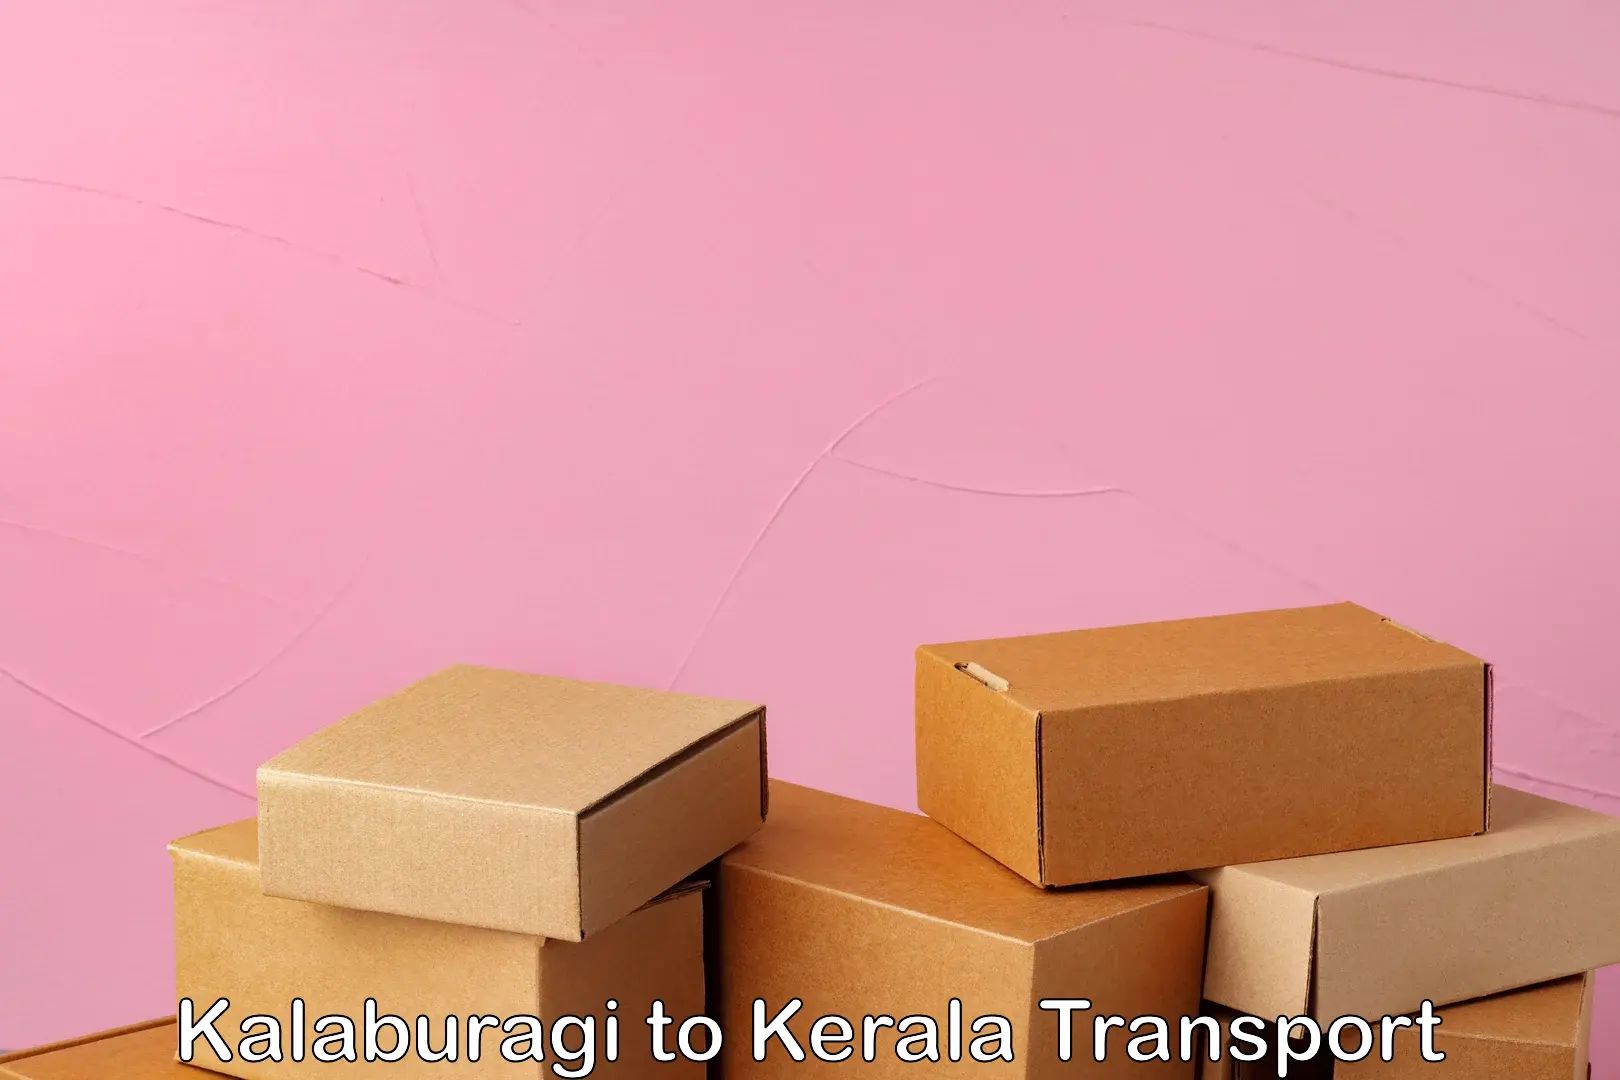 Shipping partner Kalaburagi to Kozhikode